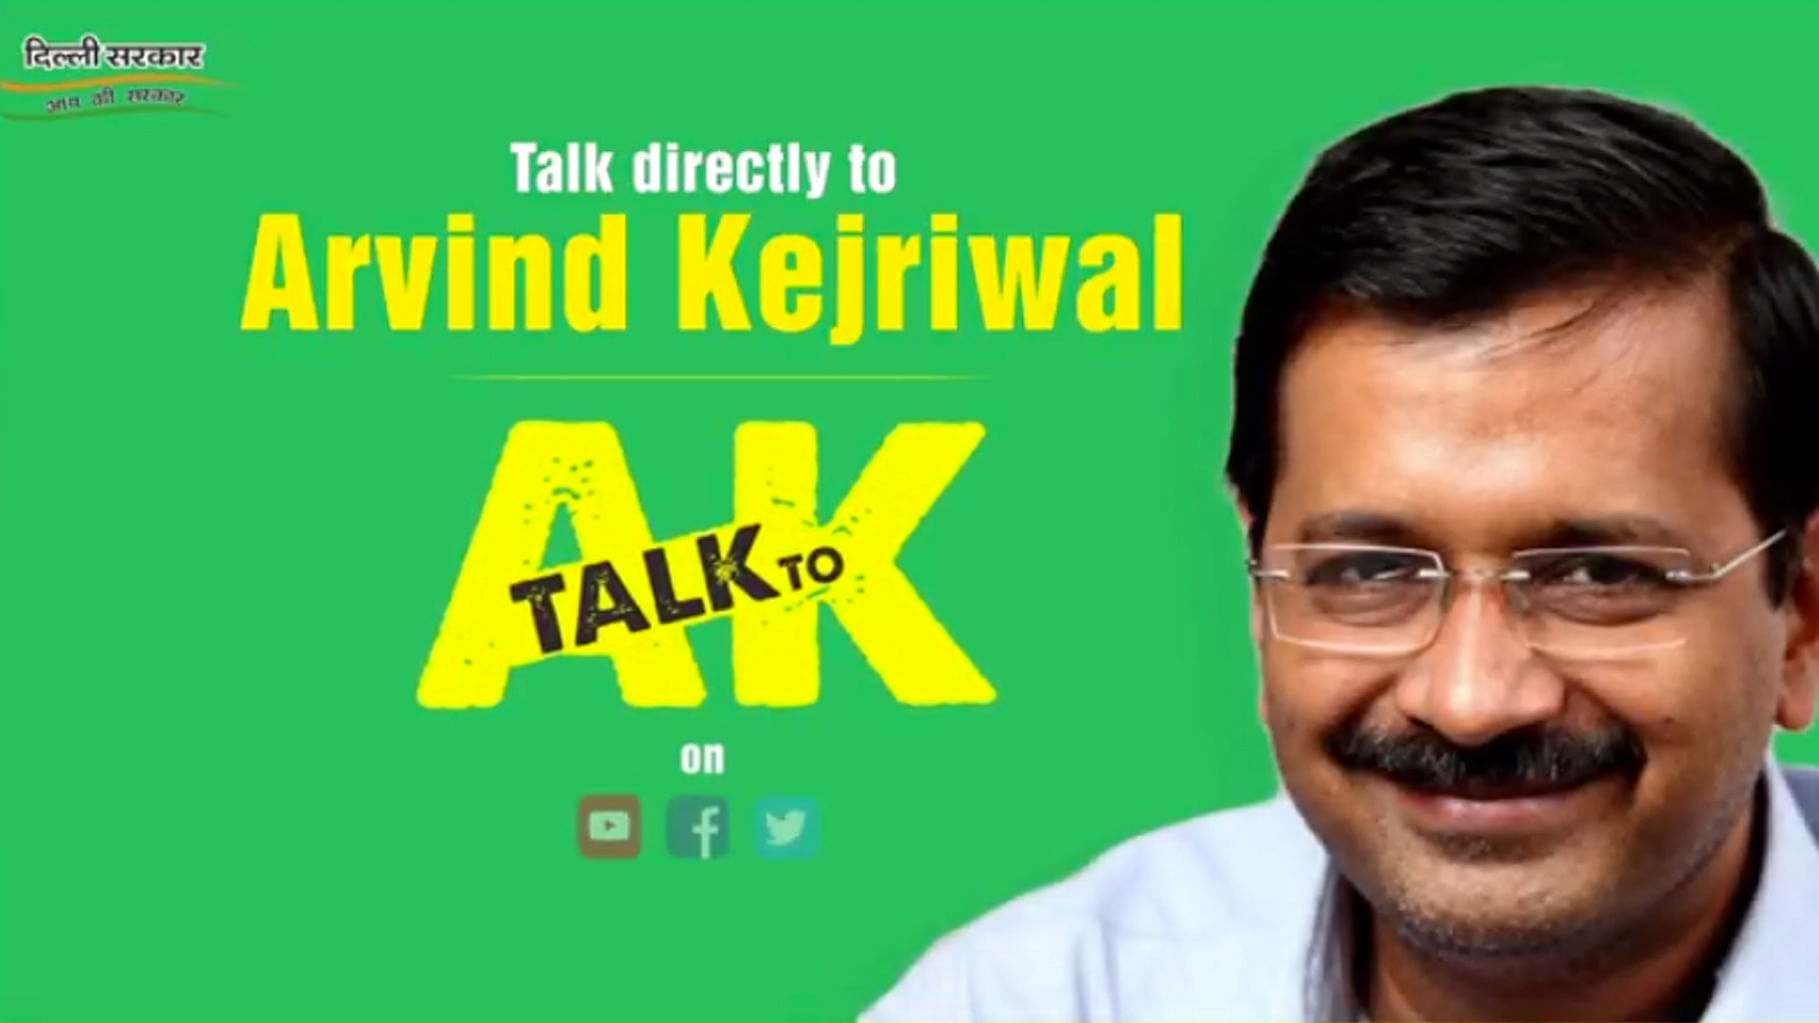 Delhi Chief Minister Arvind Kejriwal conducted a live chat on Sunday at 11 am.&nbsp;(Photo: <a href="http://talktoak.com/">TalktoAK.com</a>)